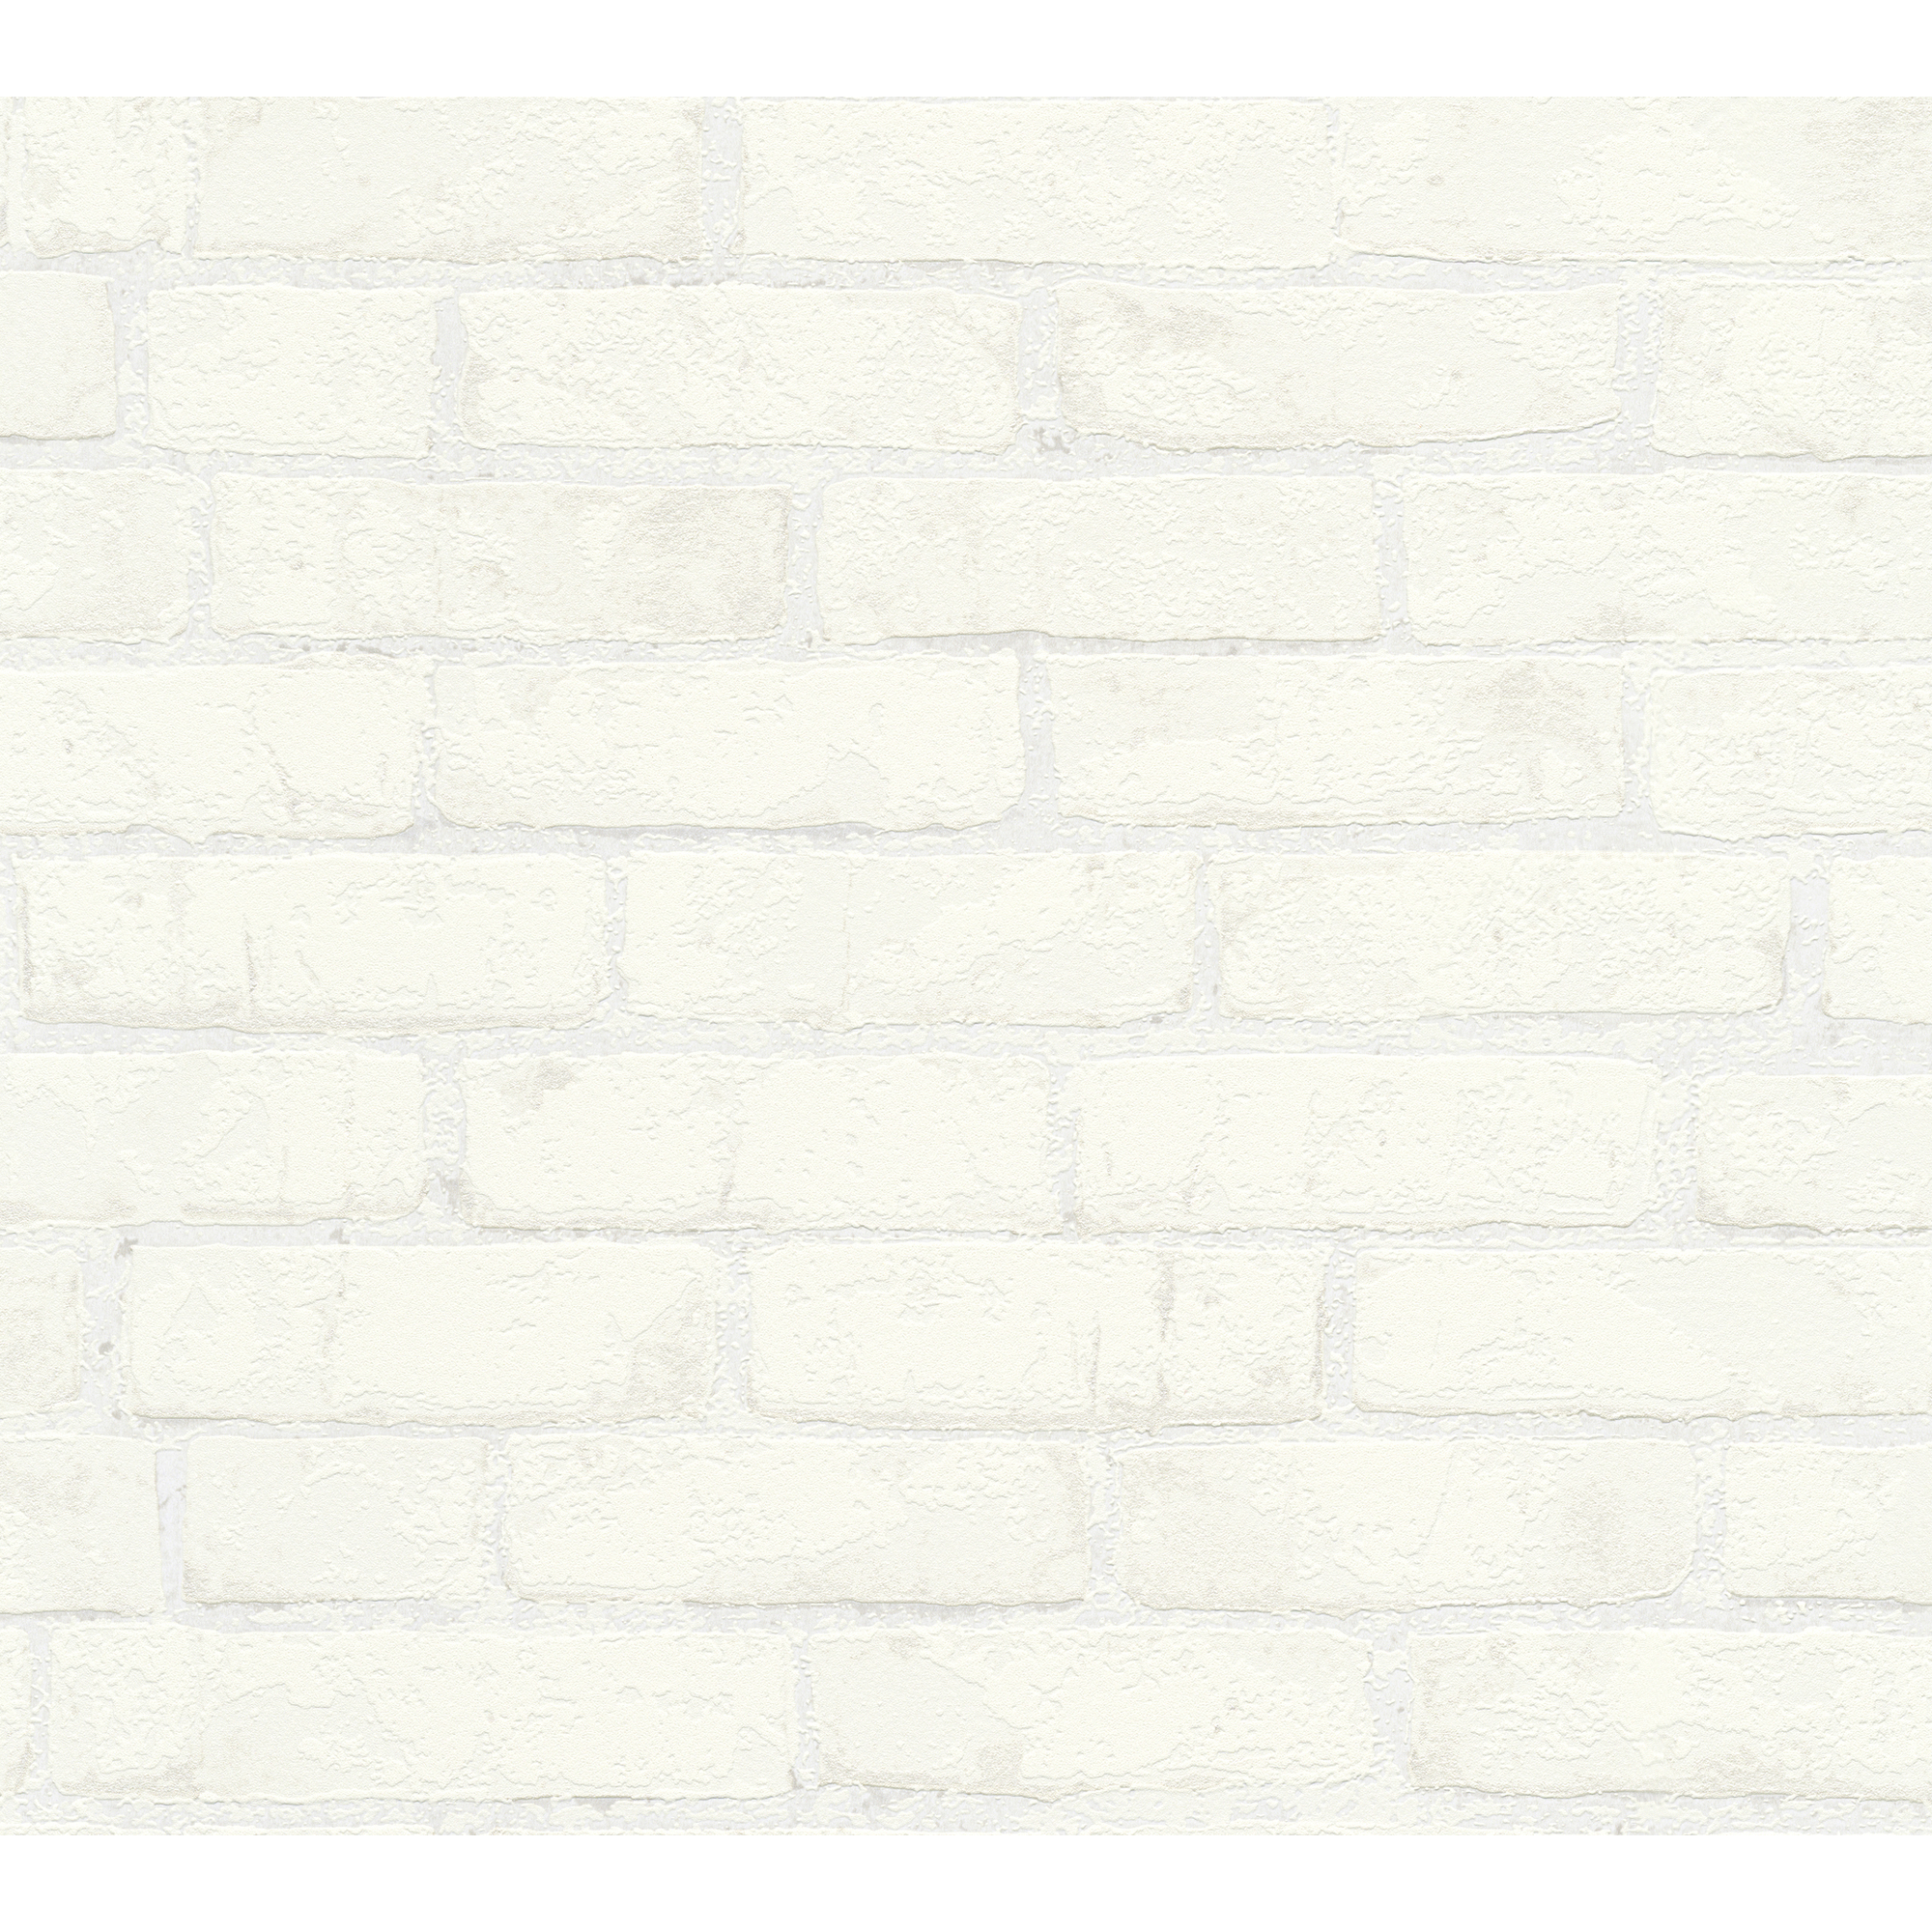 Vliestapete 'Shades of White' Steinwand weiß/silber 10,05 x 0,53 m + product picture